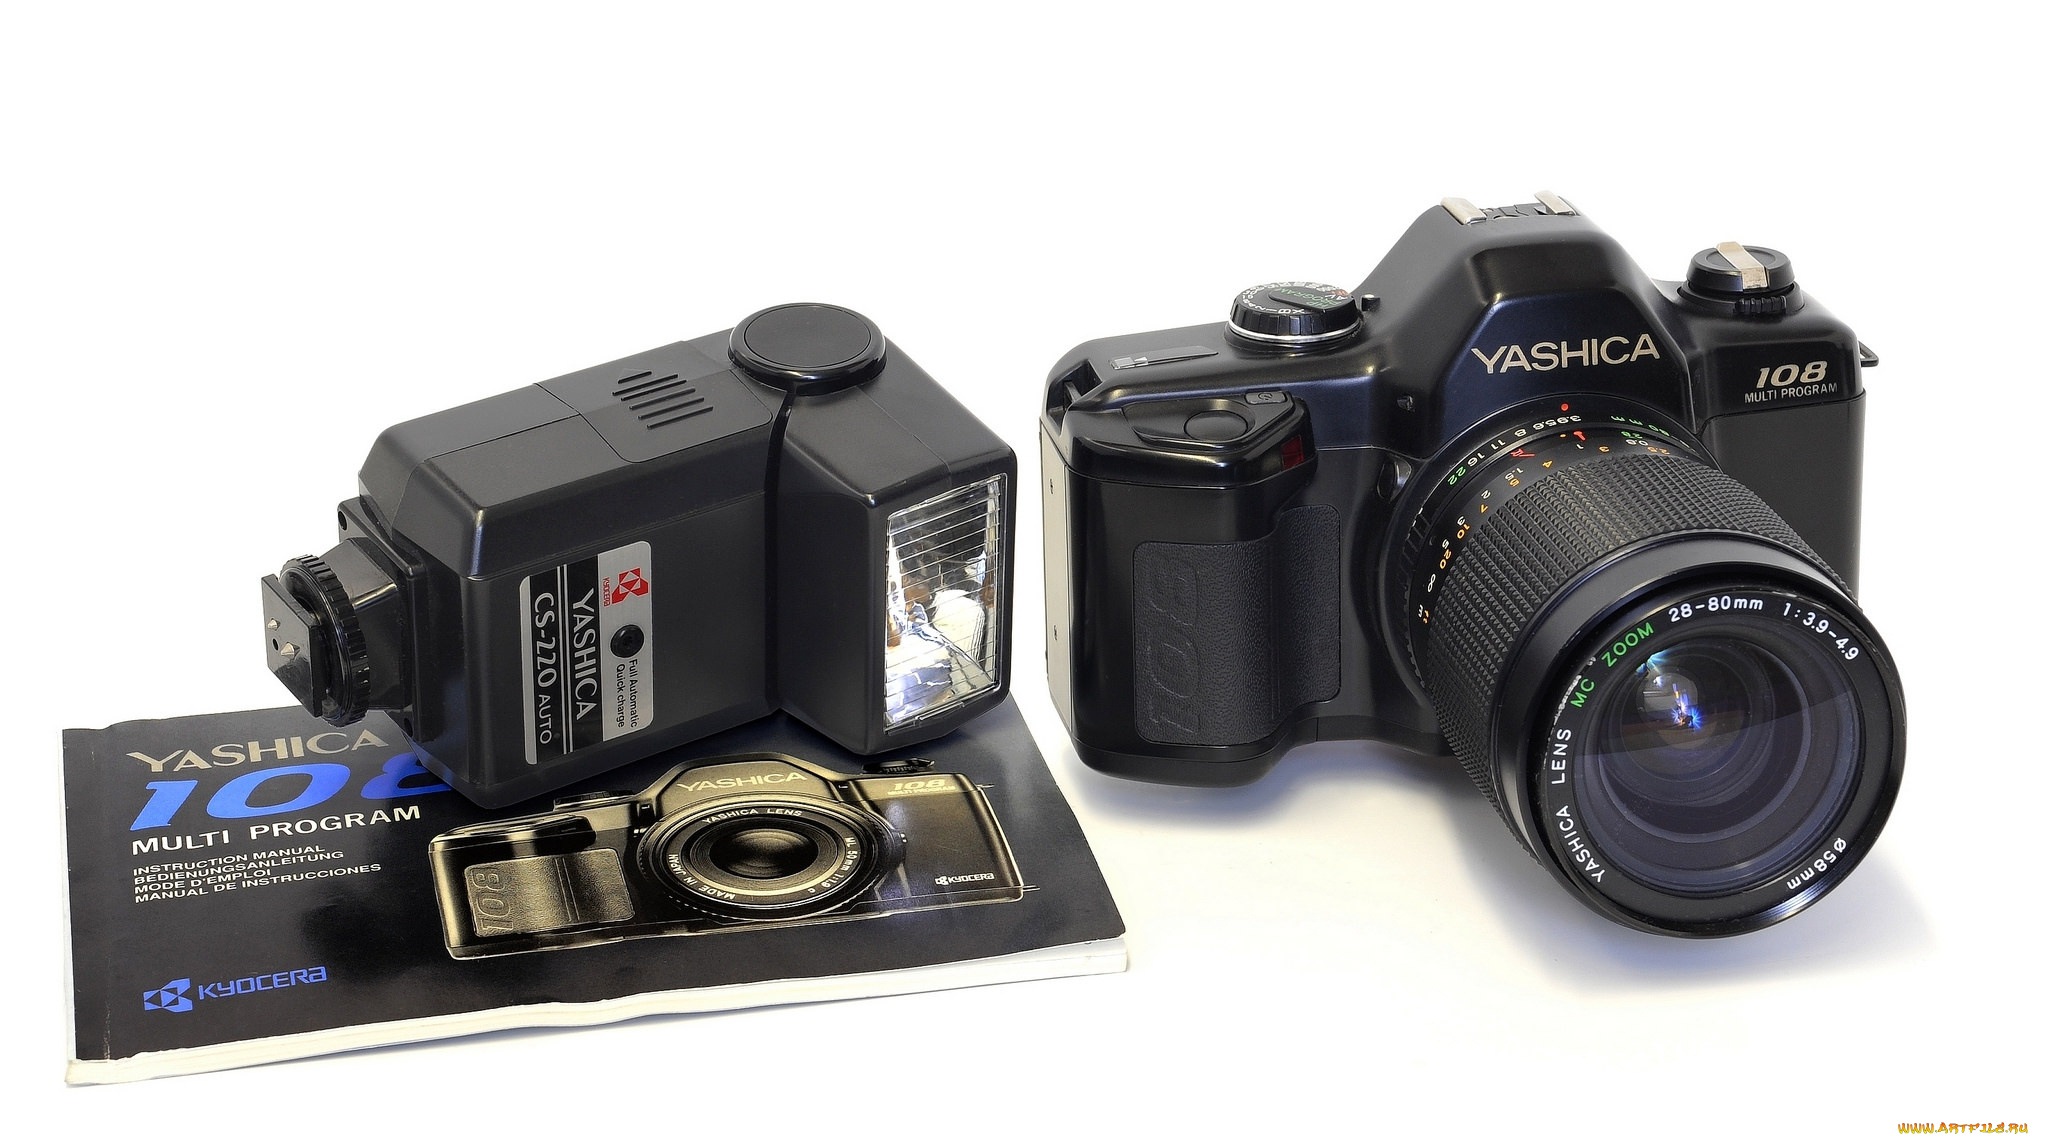 yashica, 108, multi, program, бренды, бренды, фотоаппаратов, , разное, фотокамера